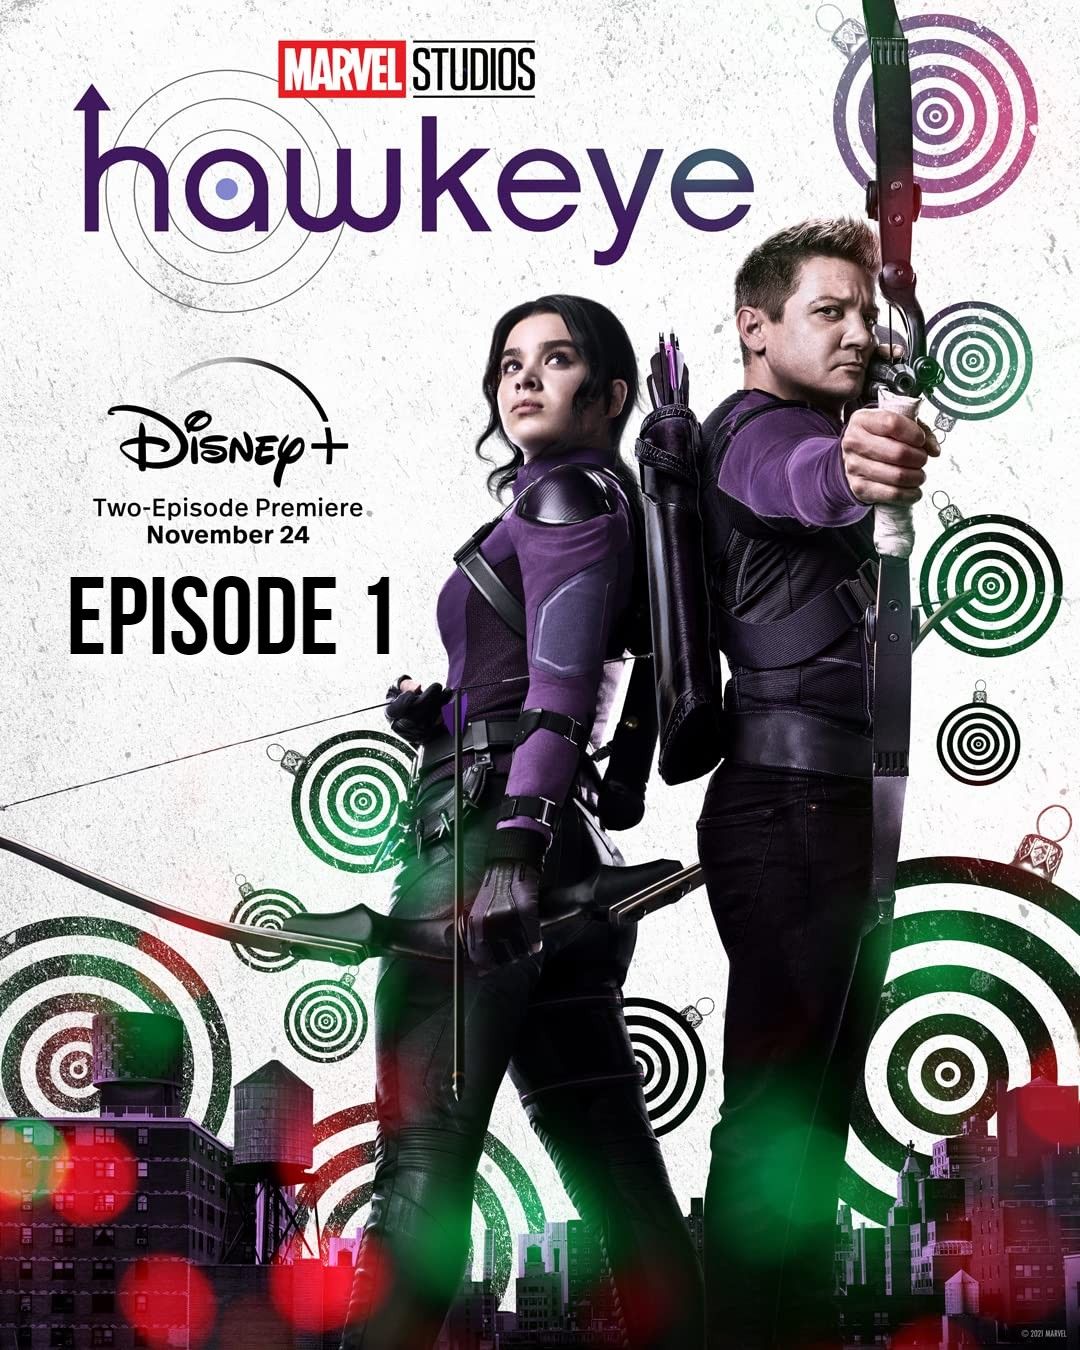 Hawkeye Season 1 (2021) Episode 1 Hindi Dubbed Marvel TV Series download full movie